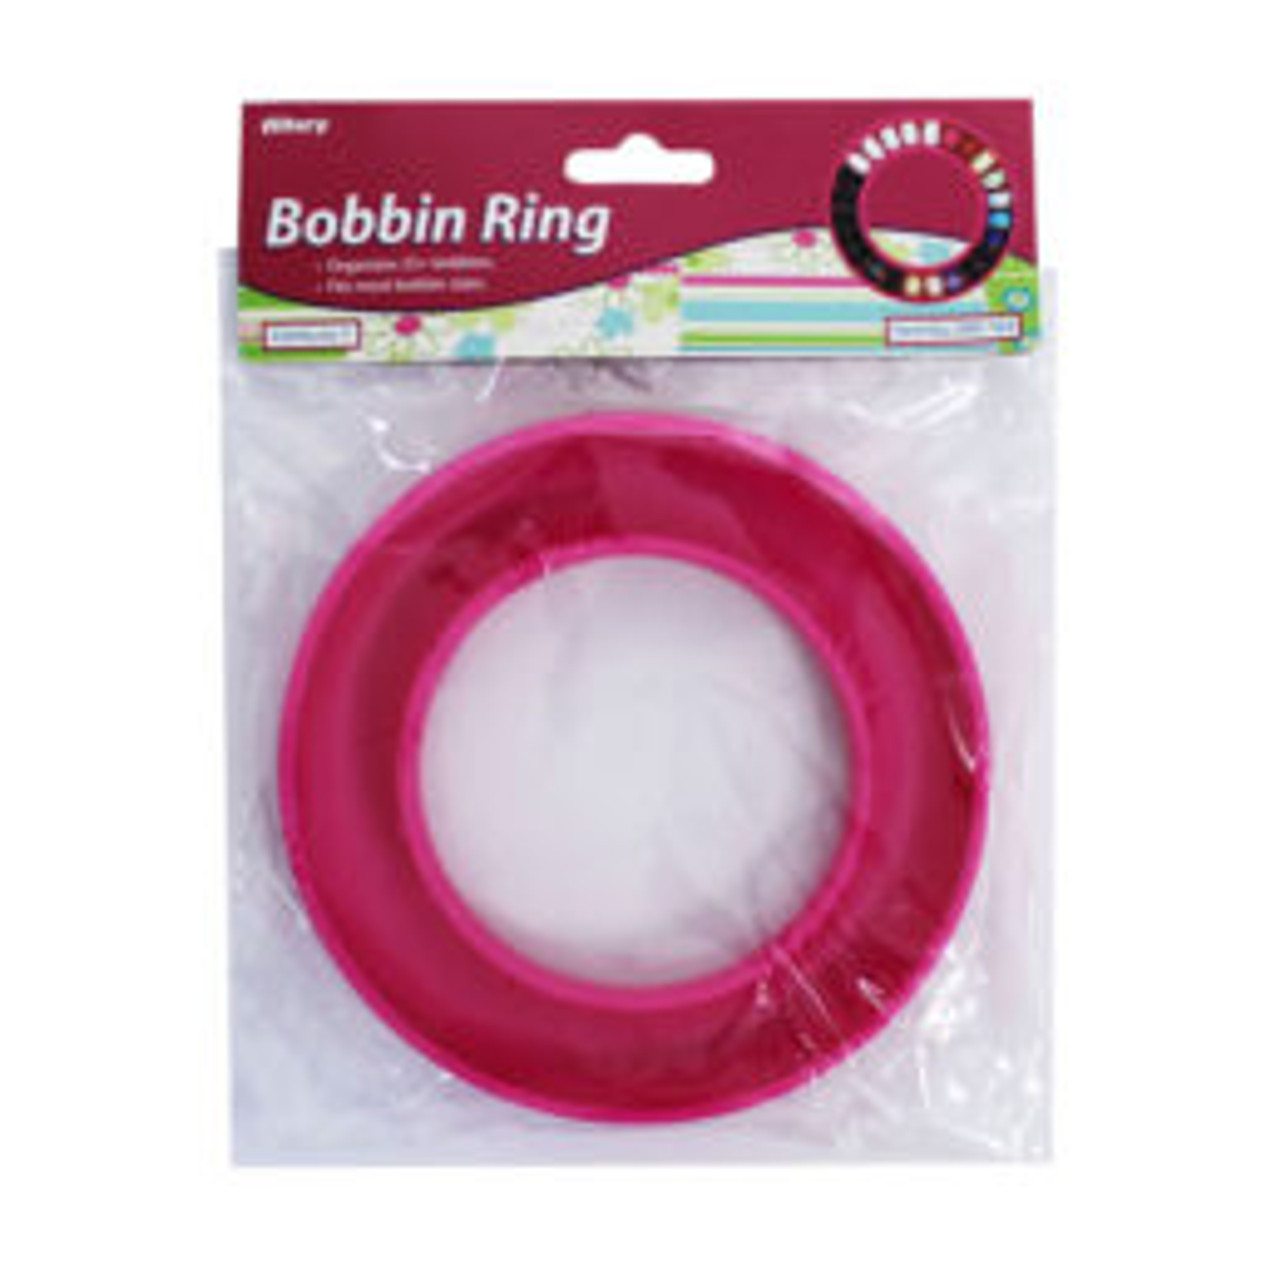 Sewing Bobbin Saver in Pink for Metal or Plastic Sewing Bobbins